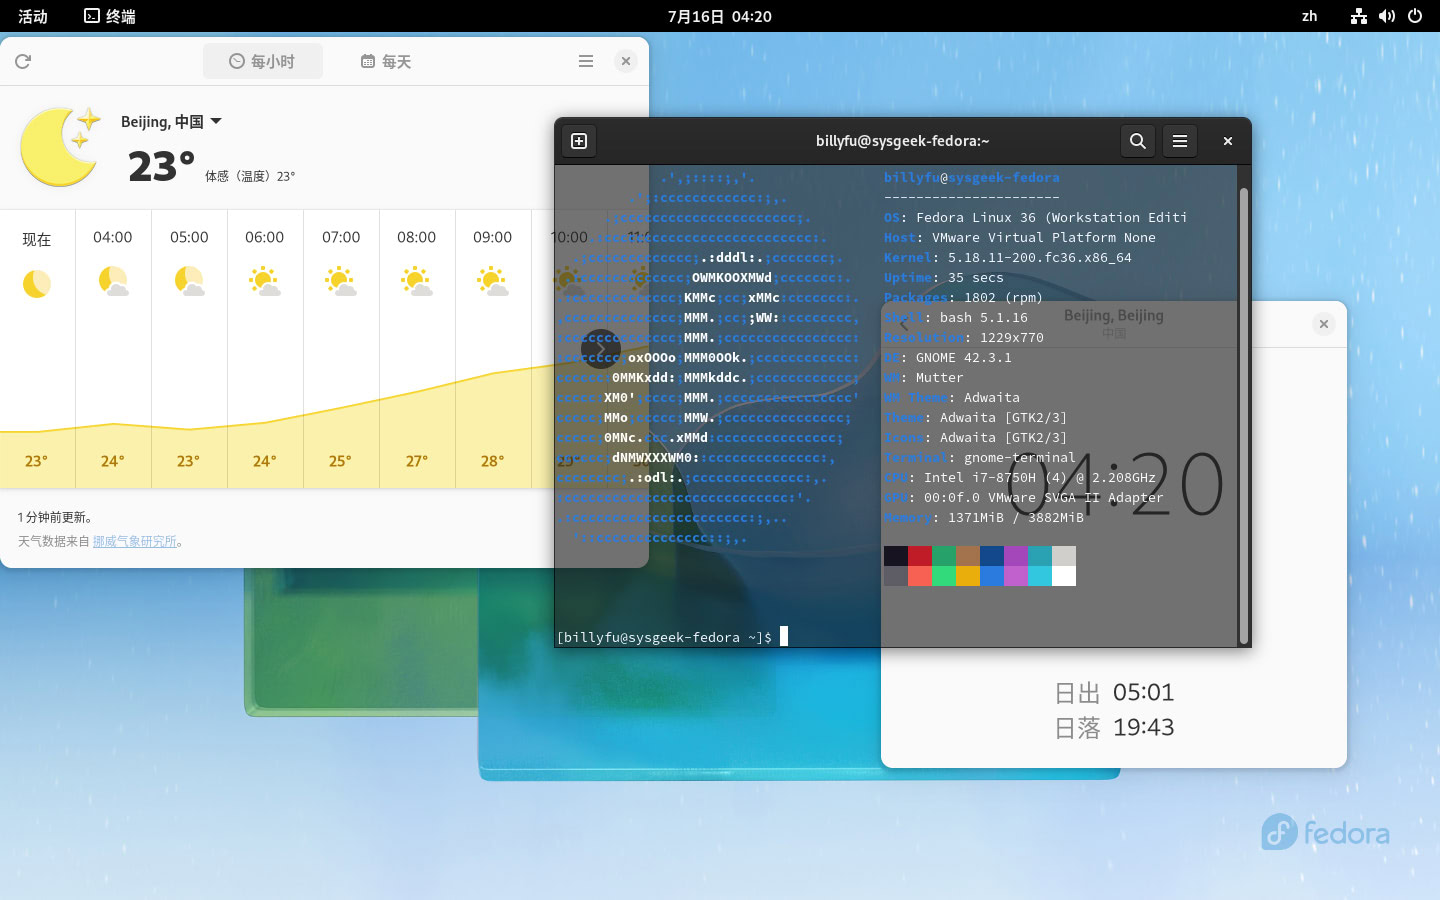 Fedora KDE Edition